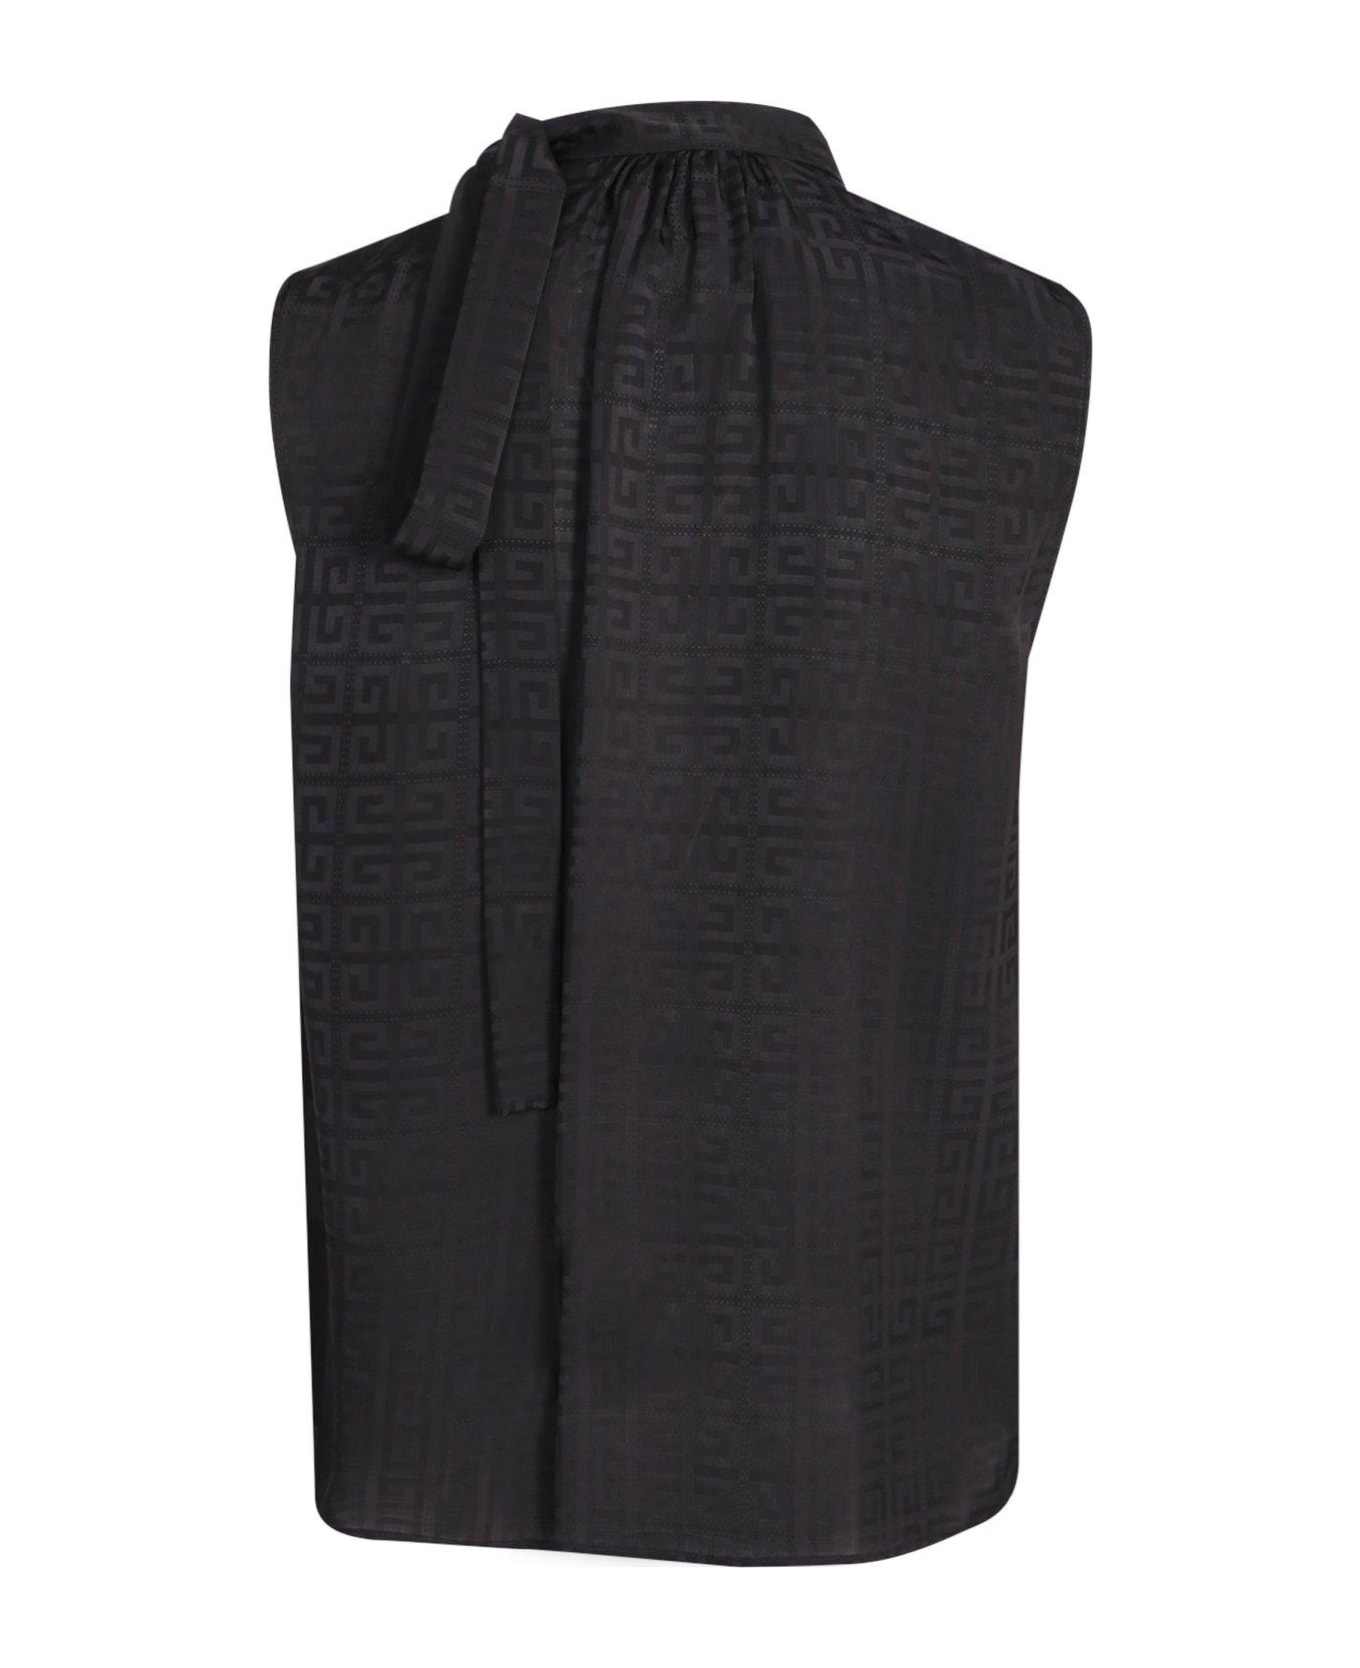 Givenchy Pattern Jacquard Sleeveless Top - Black トップス